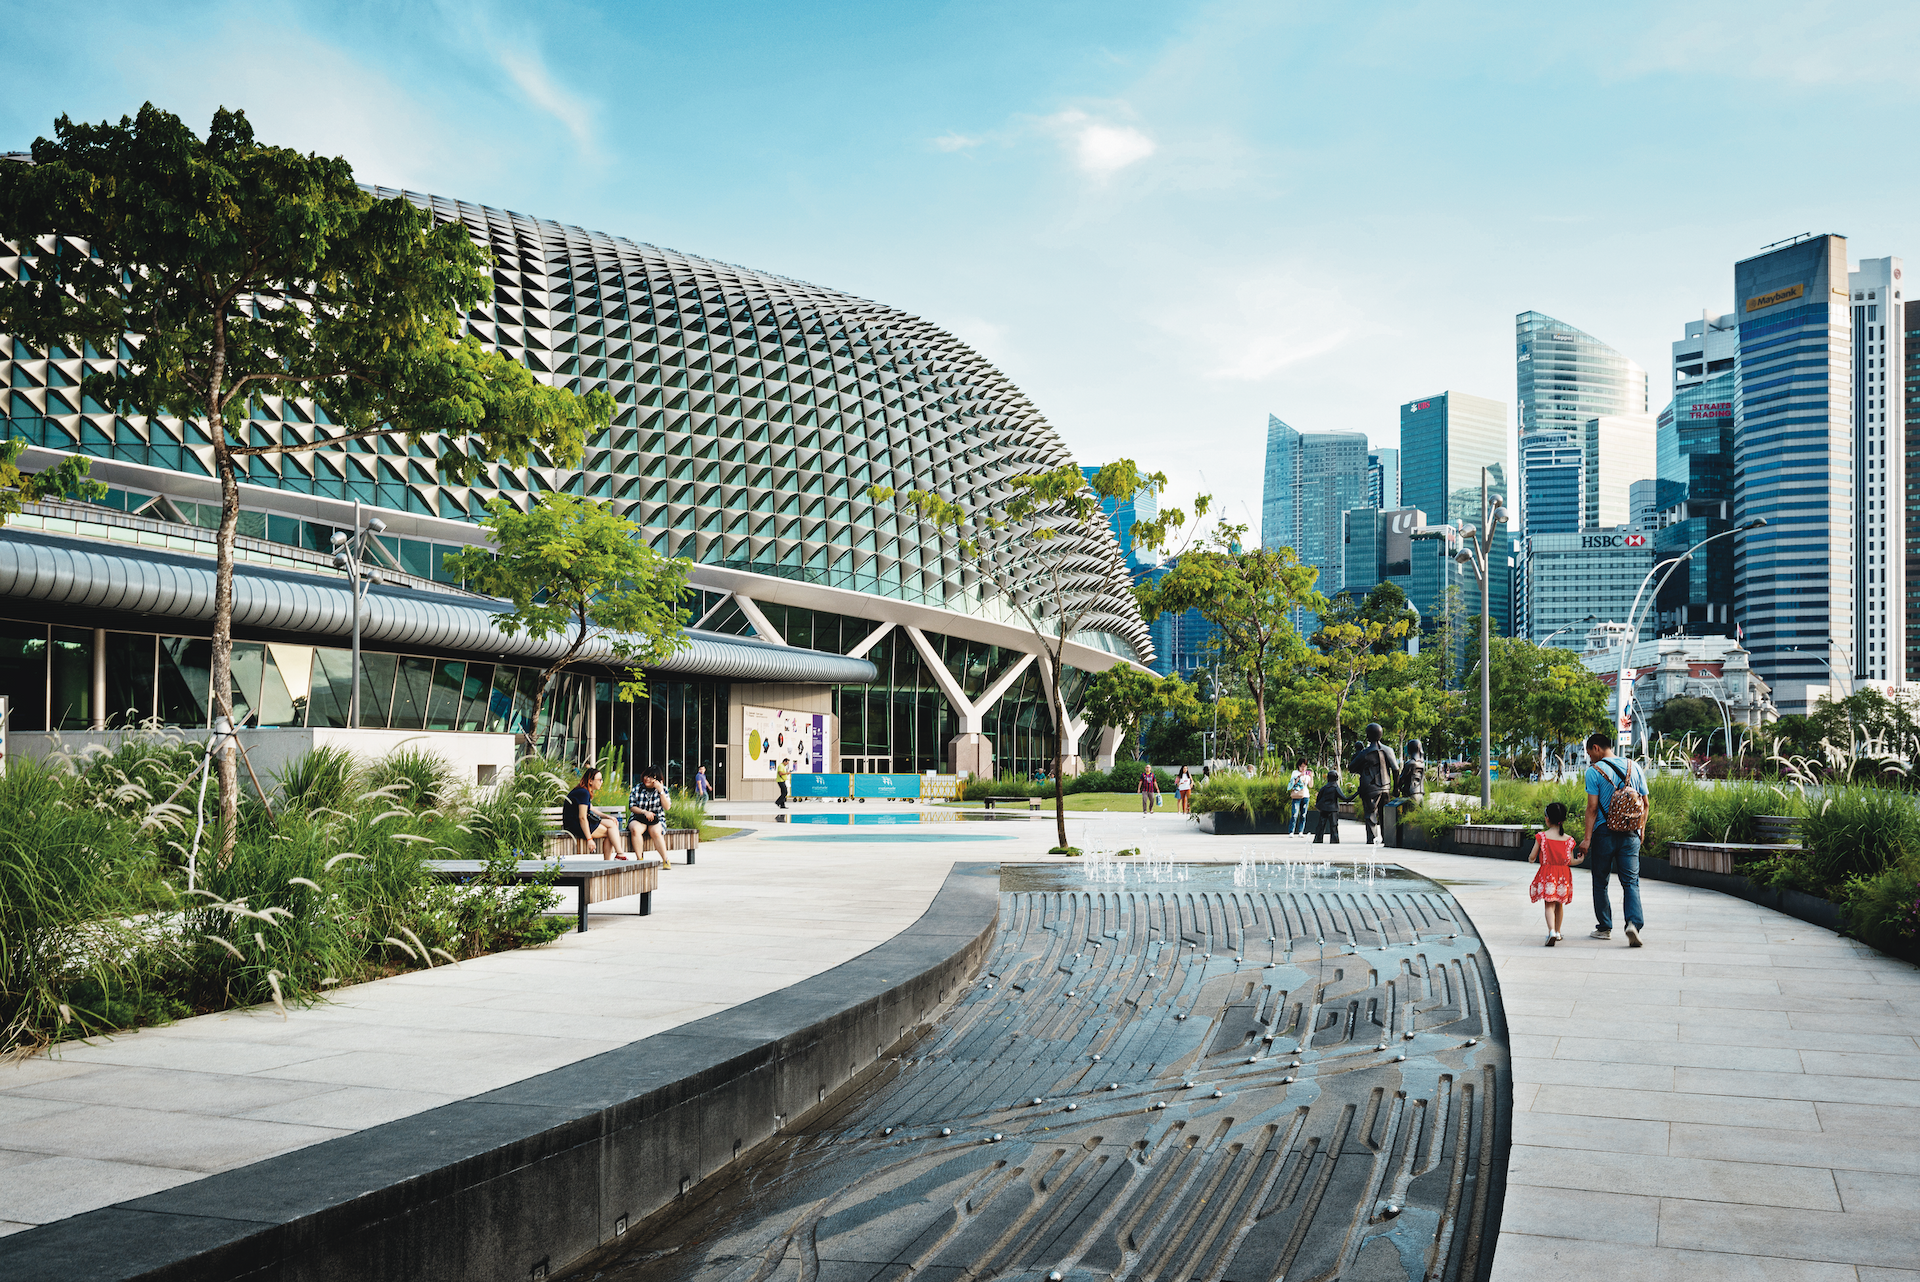 People walking past water landscape design at Esplanade Court Garden in Singapore